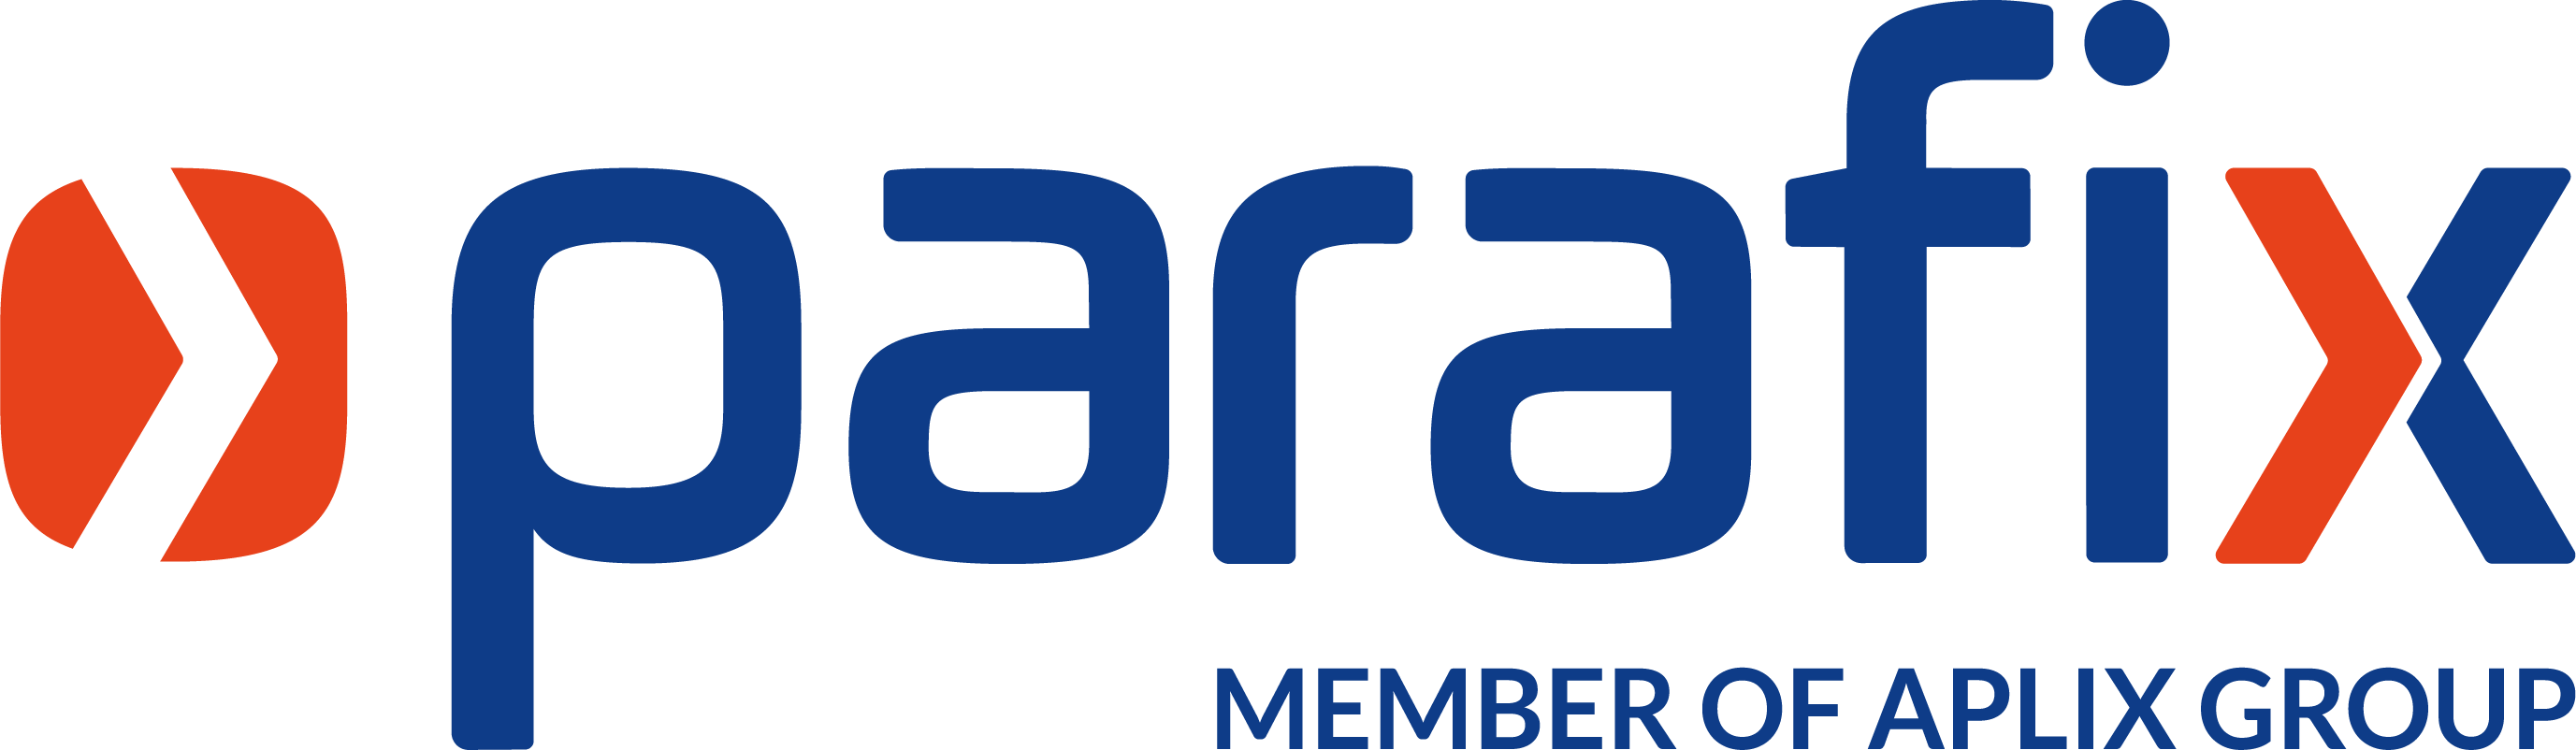 parafix-logo